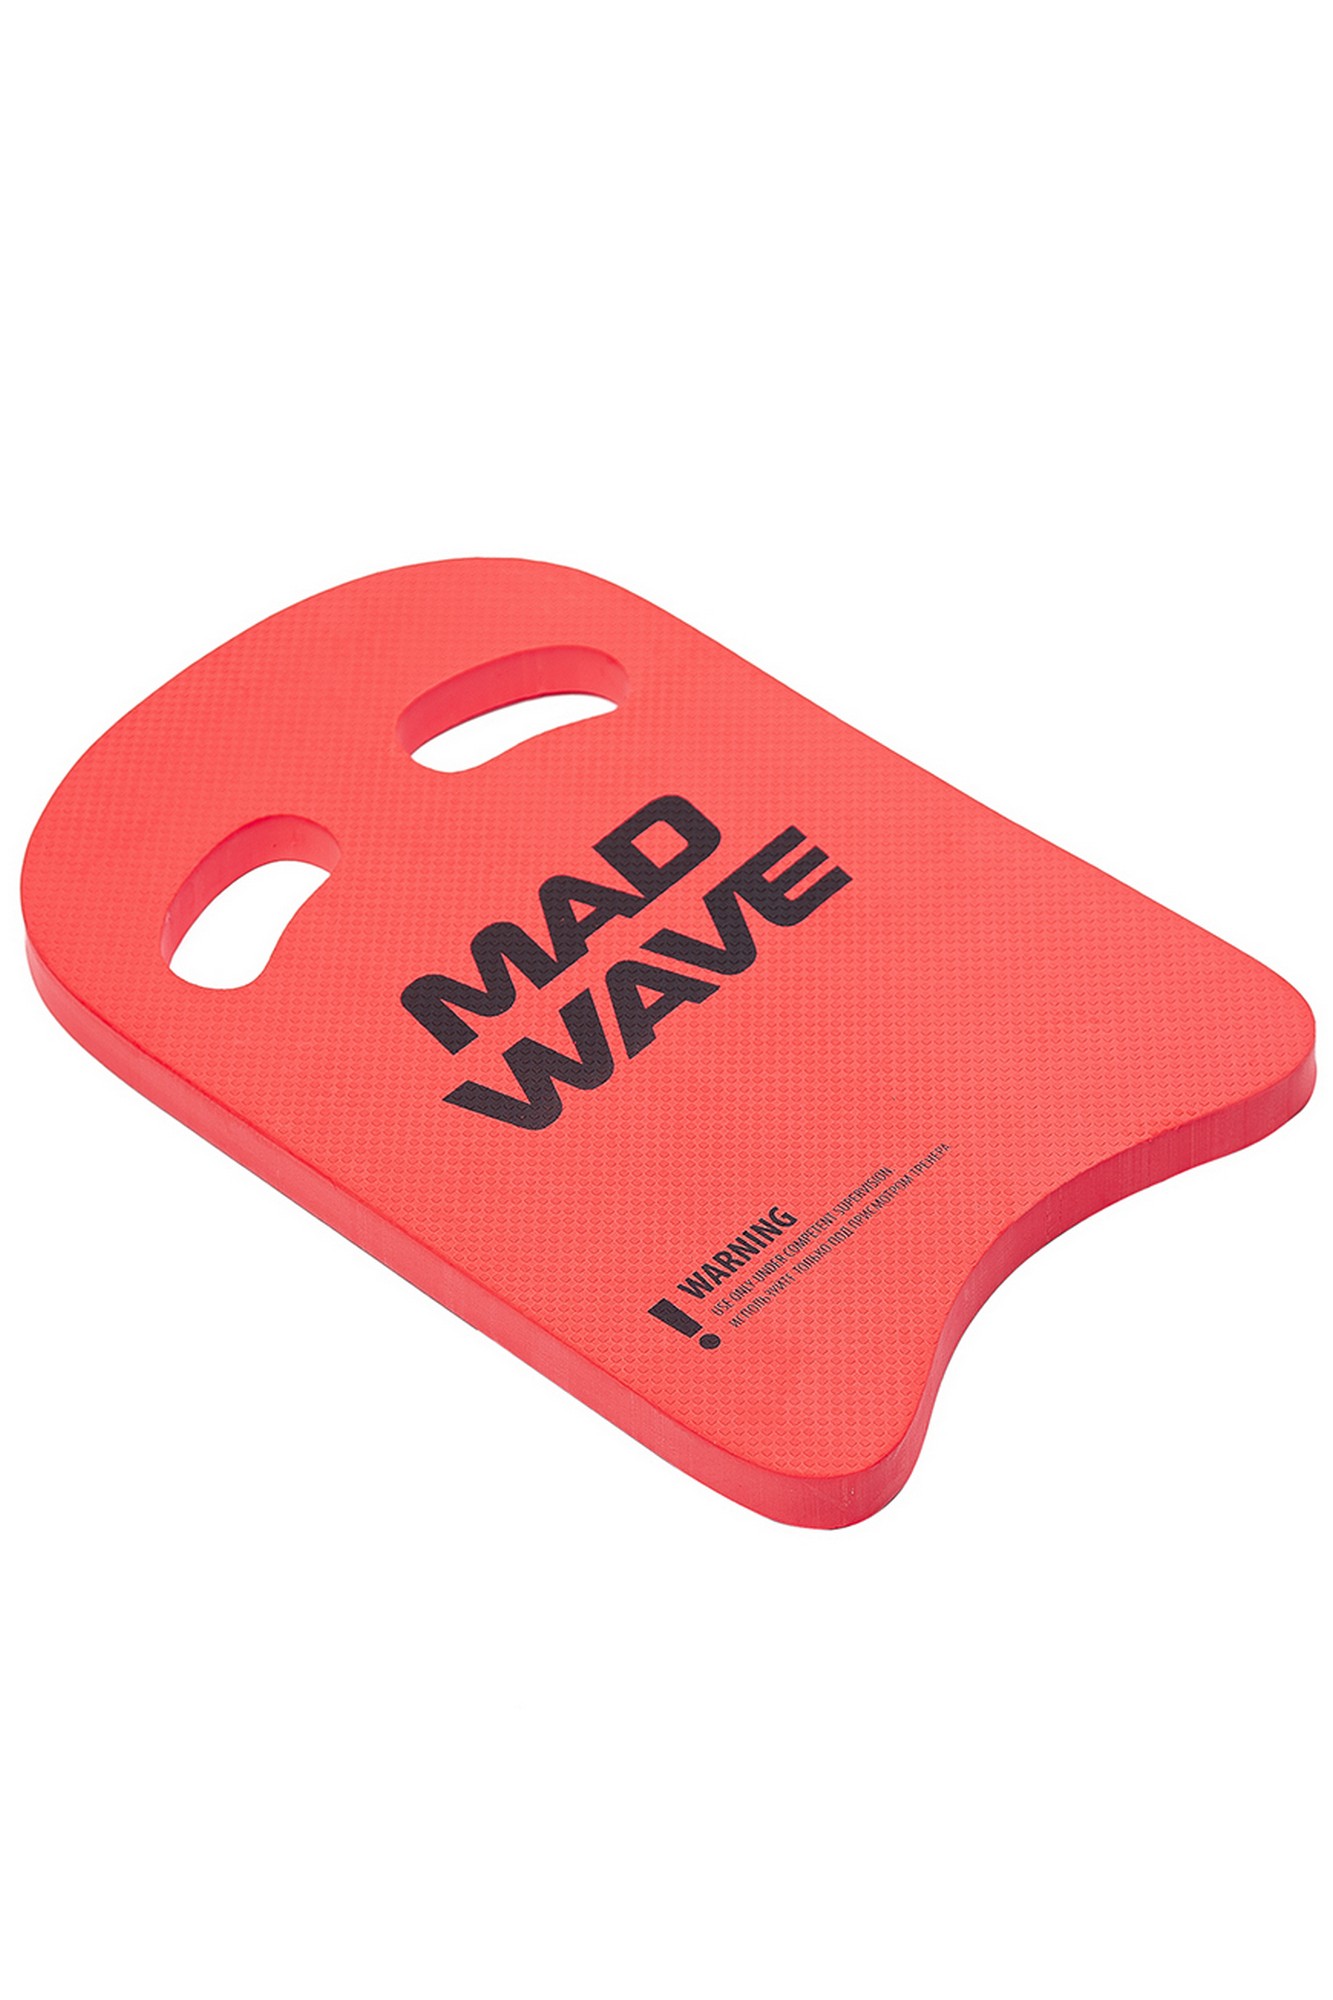 Доска для плавания Mad Wave Kickboard Light 25 M0721 02 0 05W 1333_2000